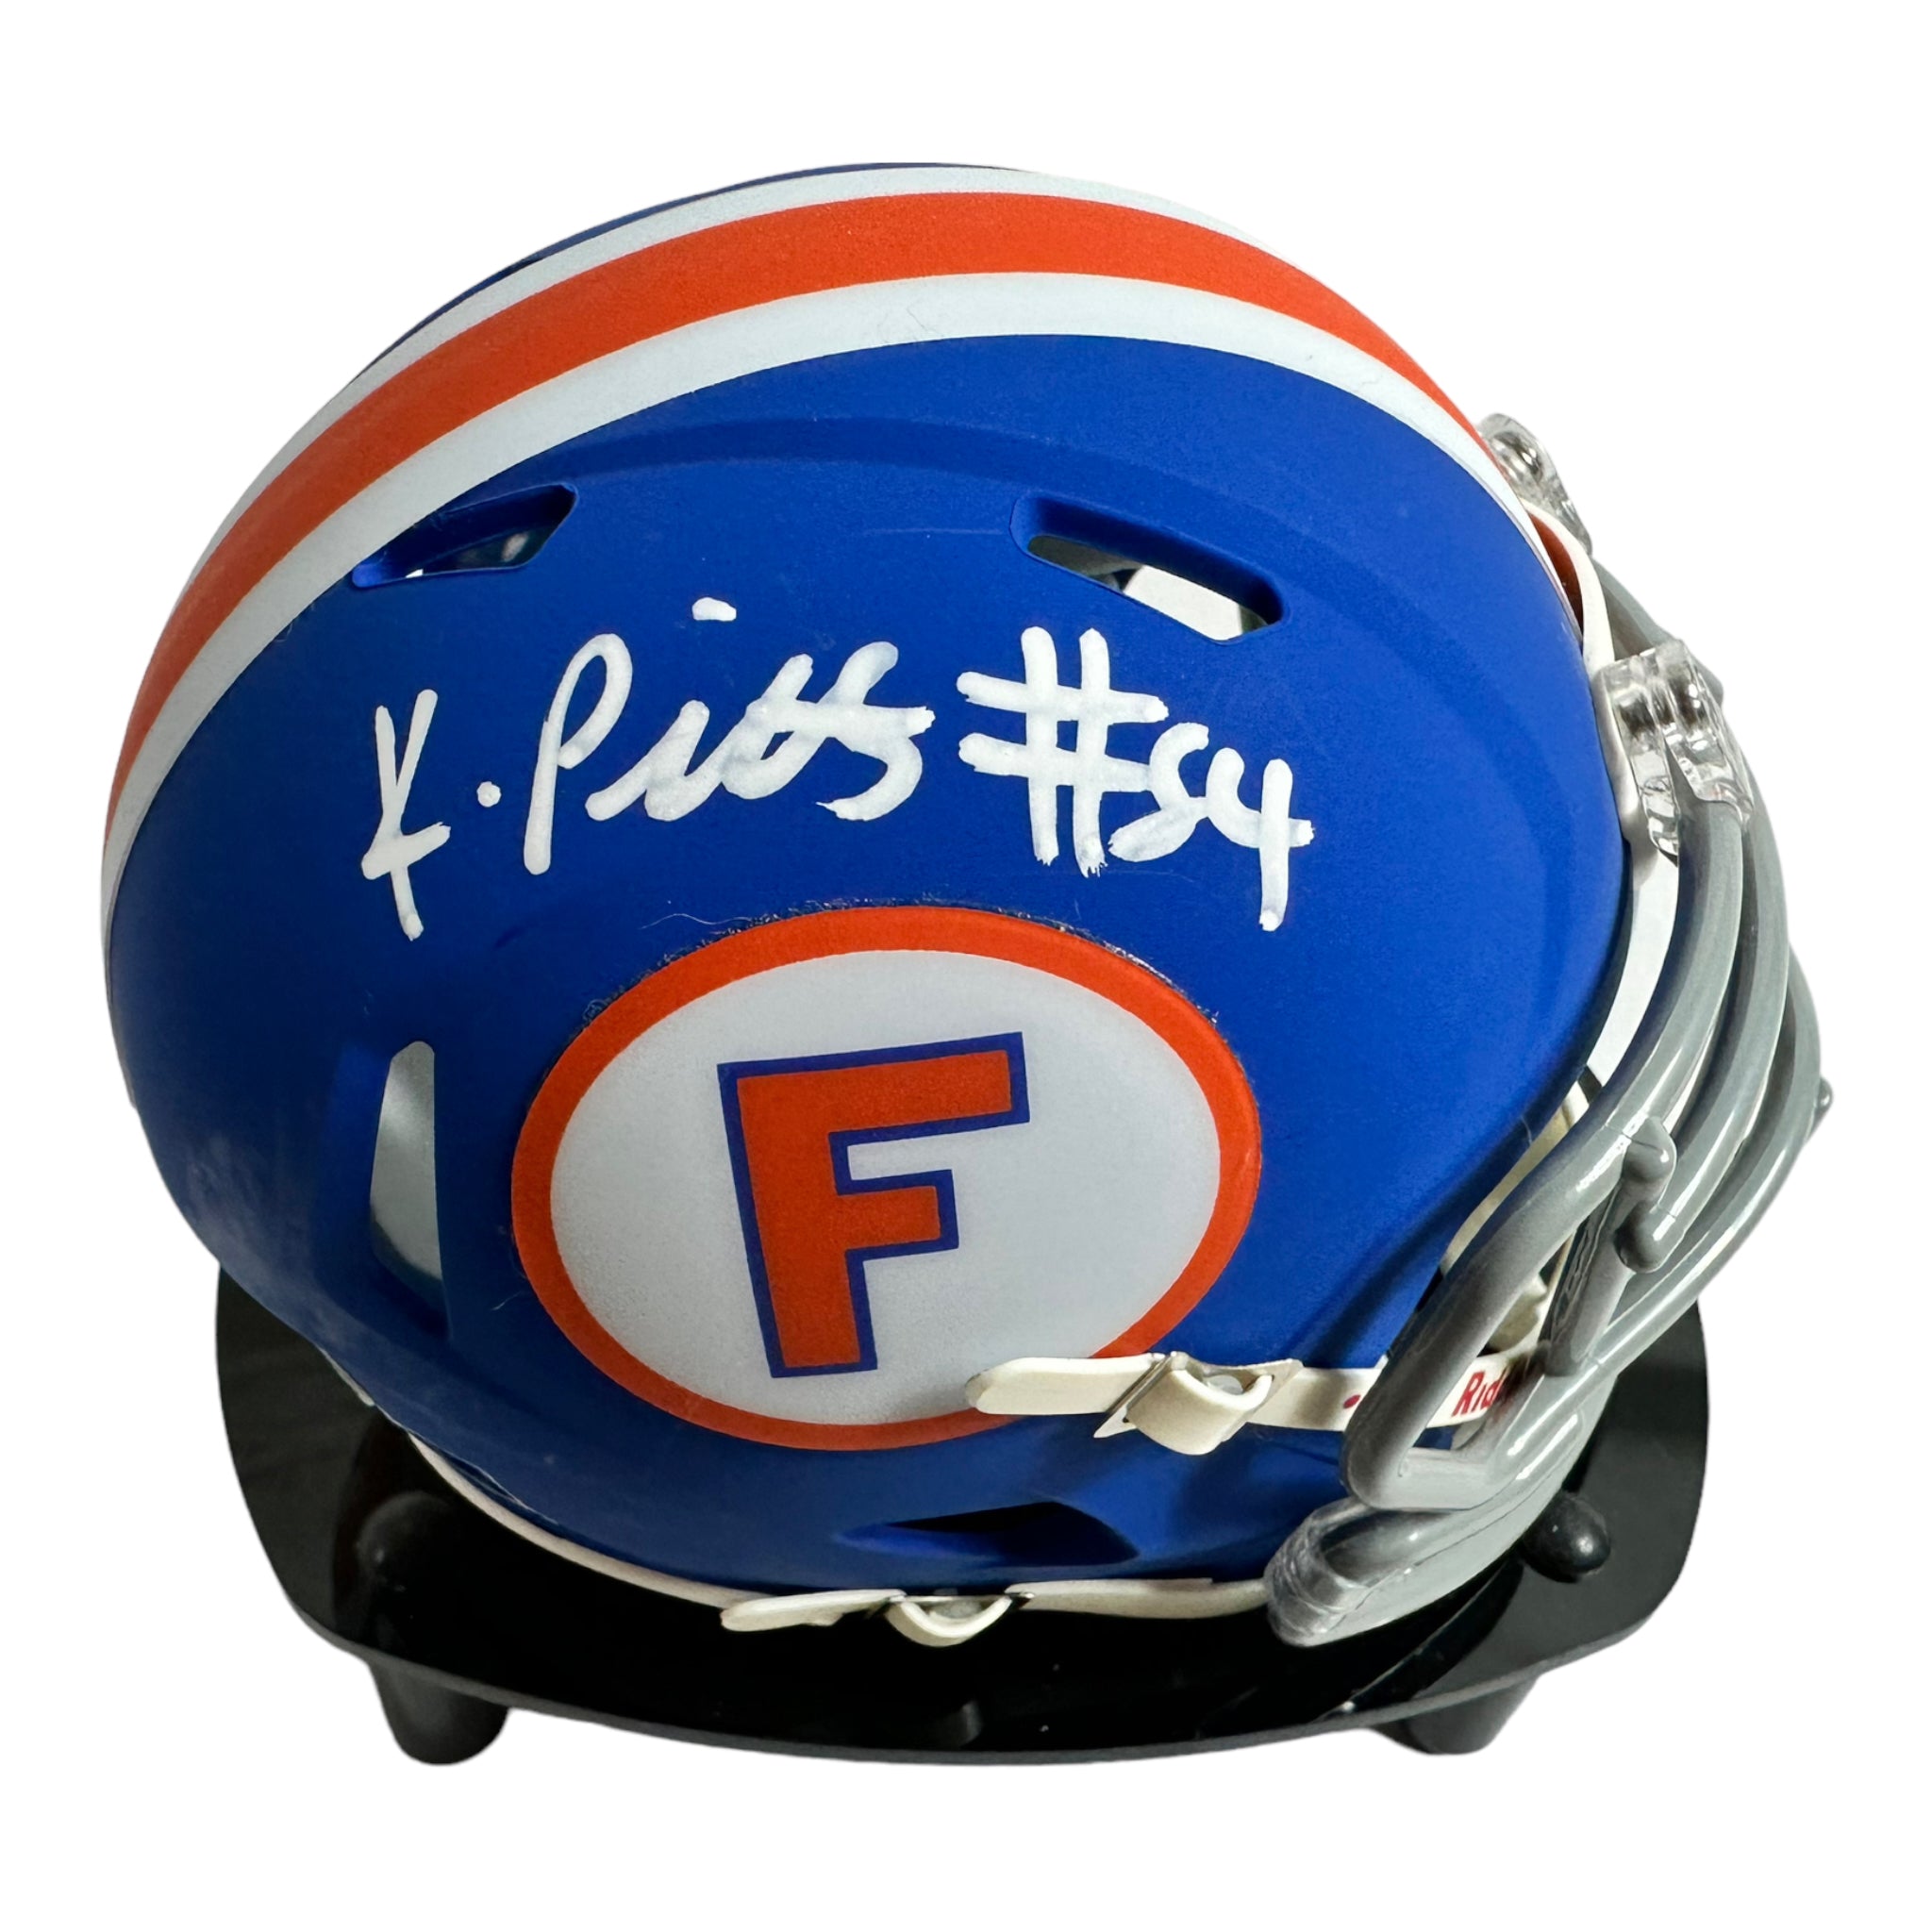 Kyle Pitts - TE Atlanta Falcons Hand Signed FL Gators Mini Helmet w/COA